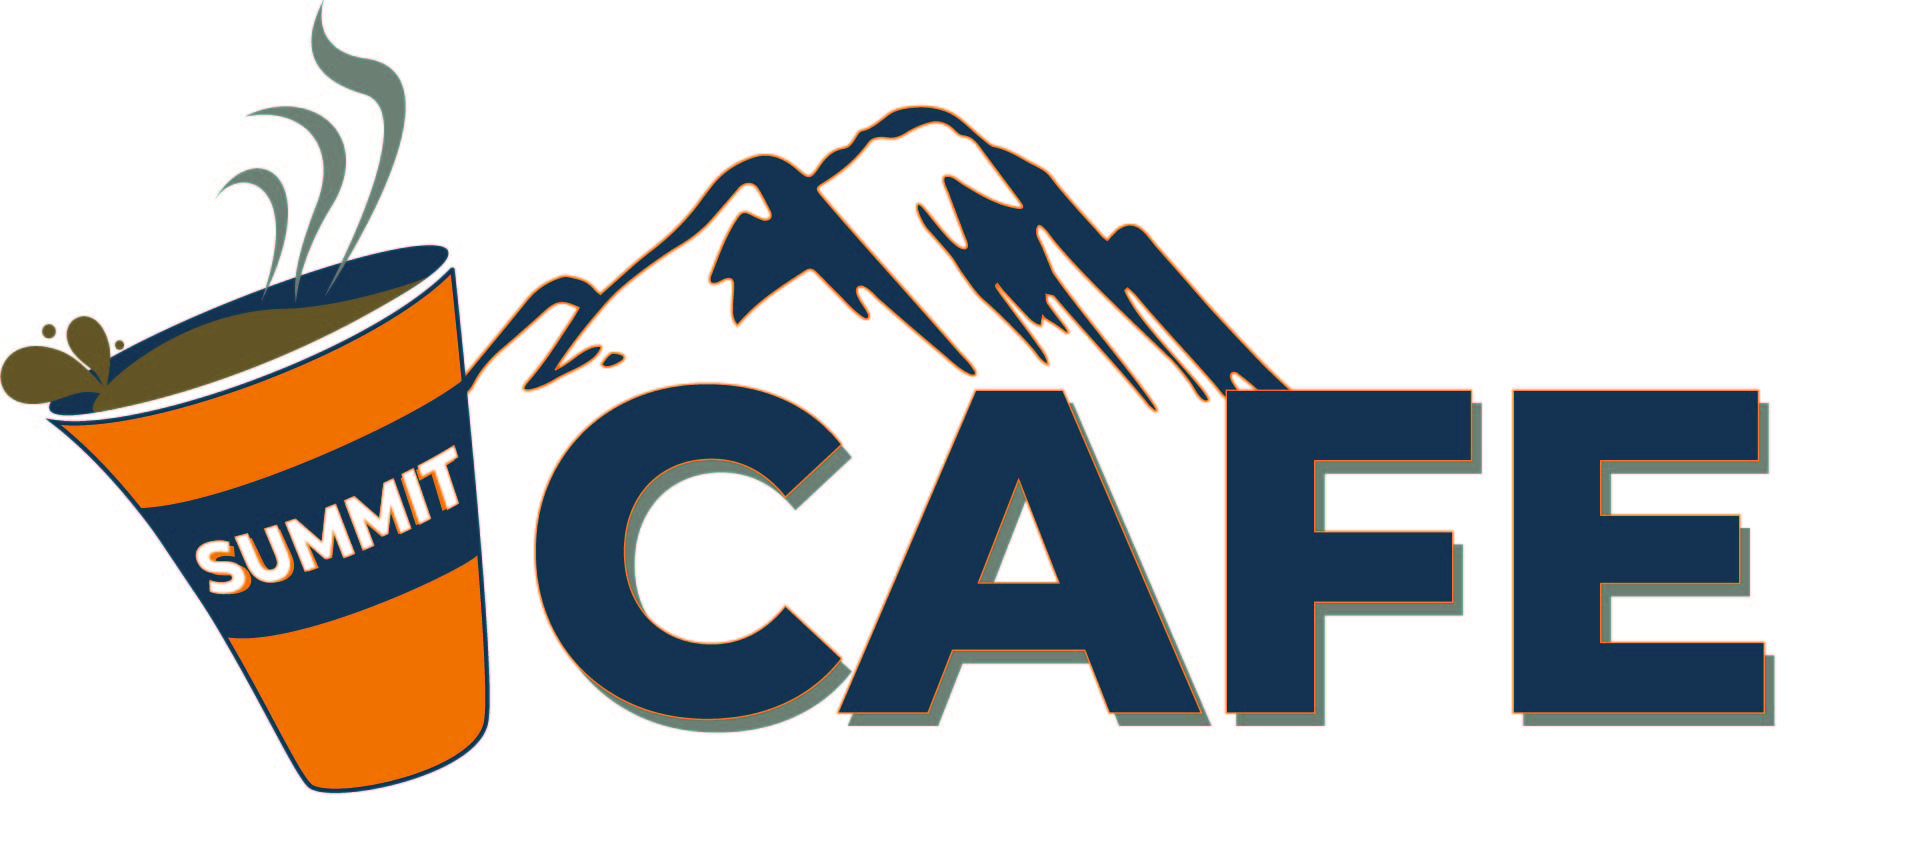 Summit-cafe-logo-food-drinks-fun-adventure